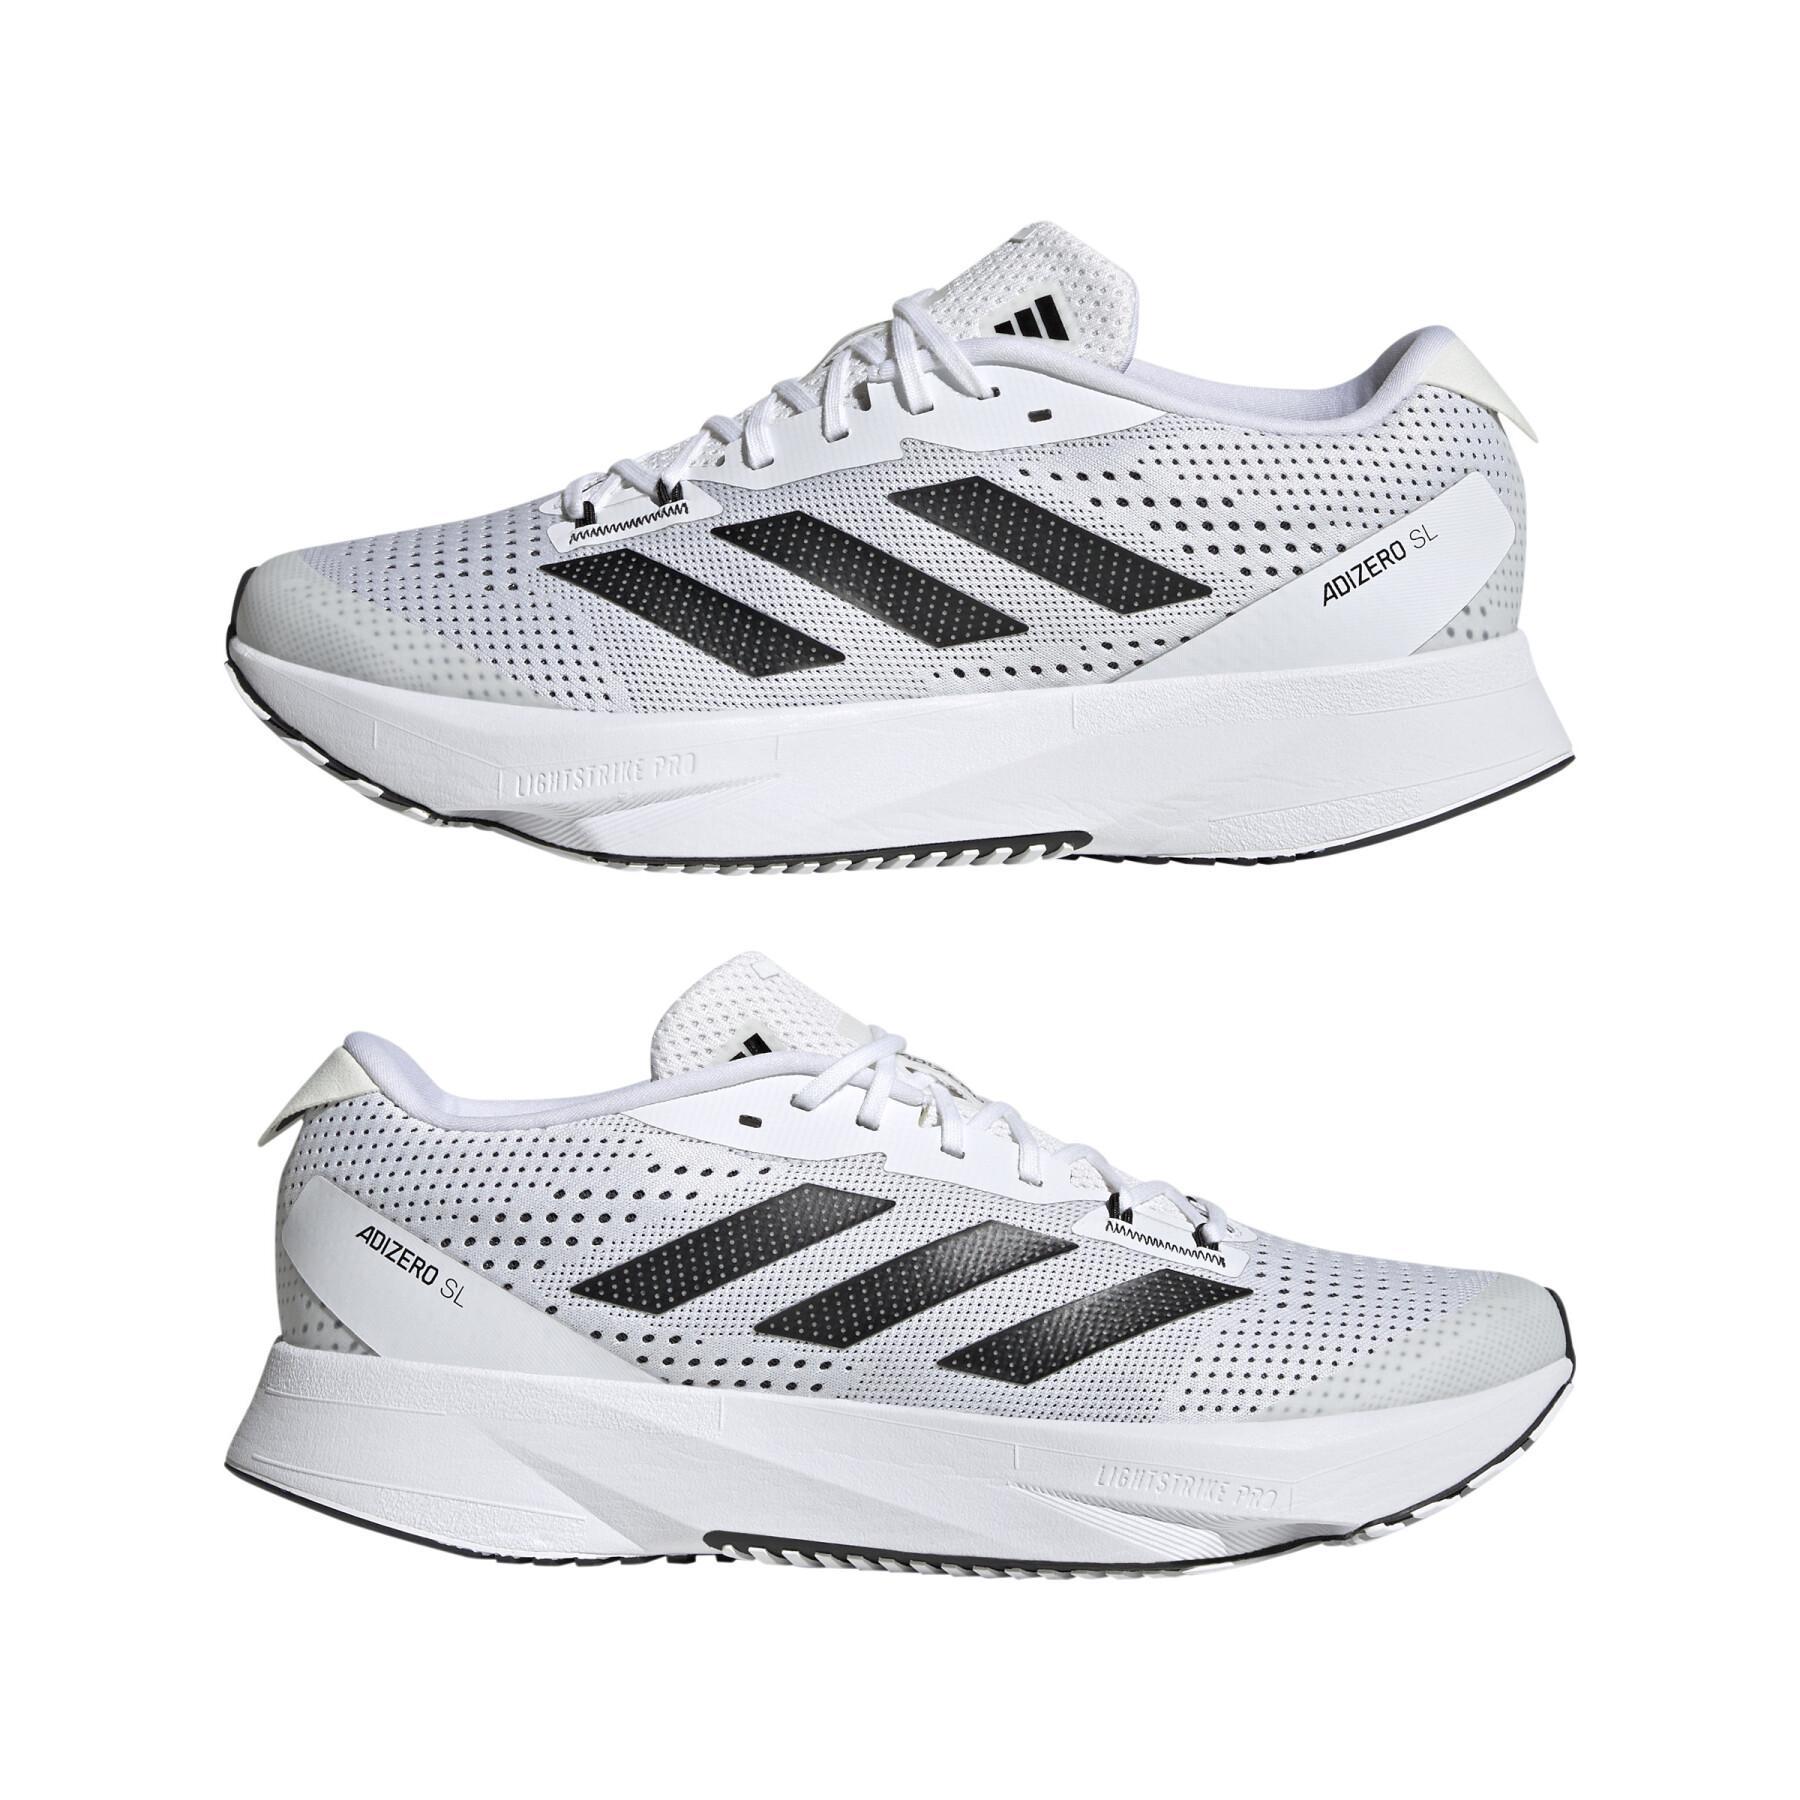 Schoenen van Running adidas Adizero SL